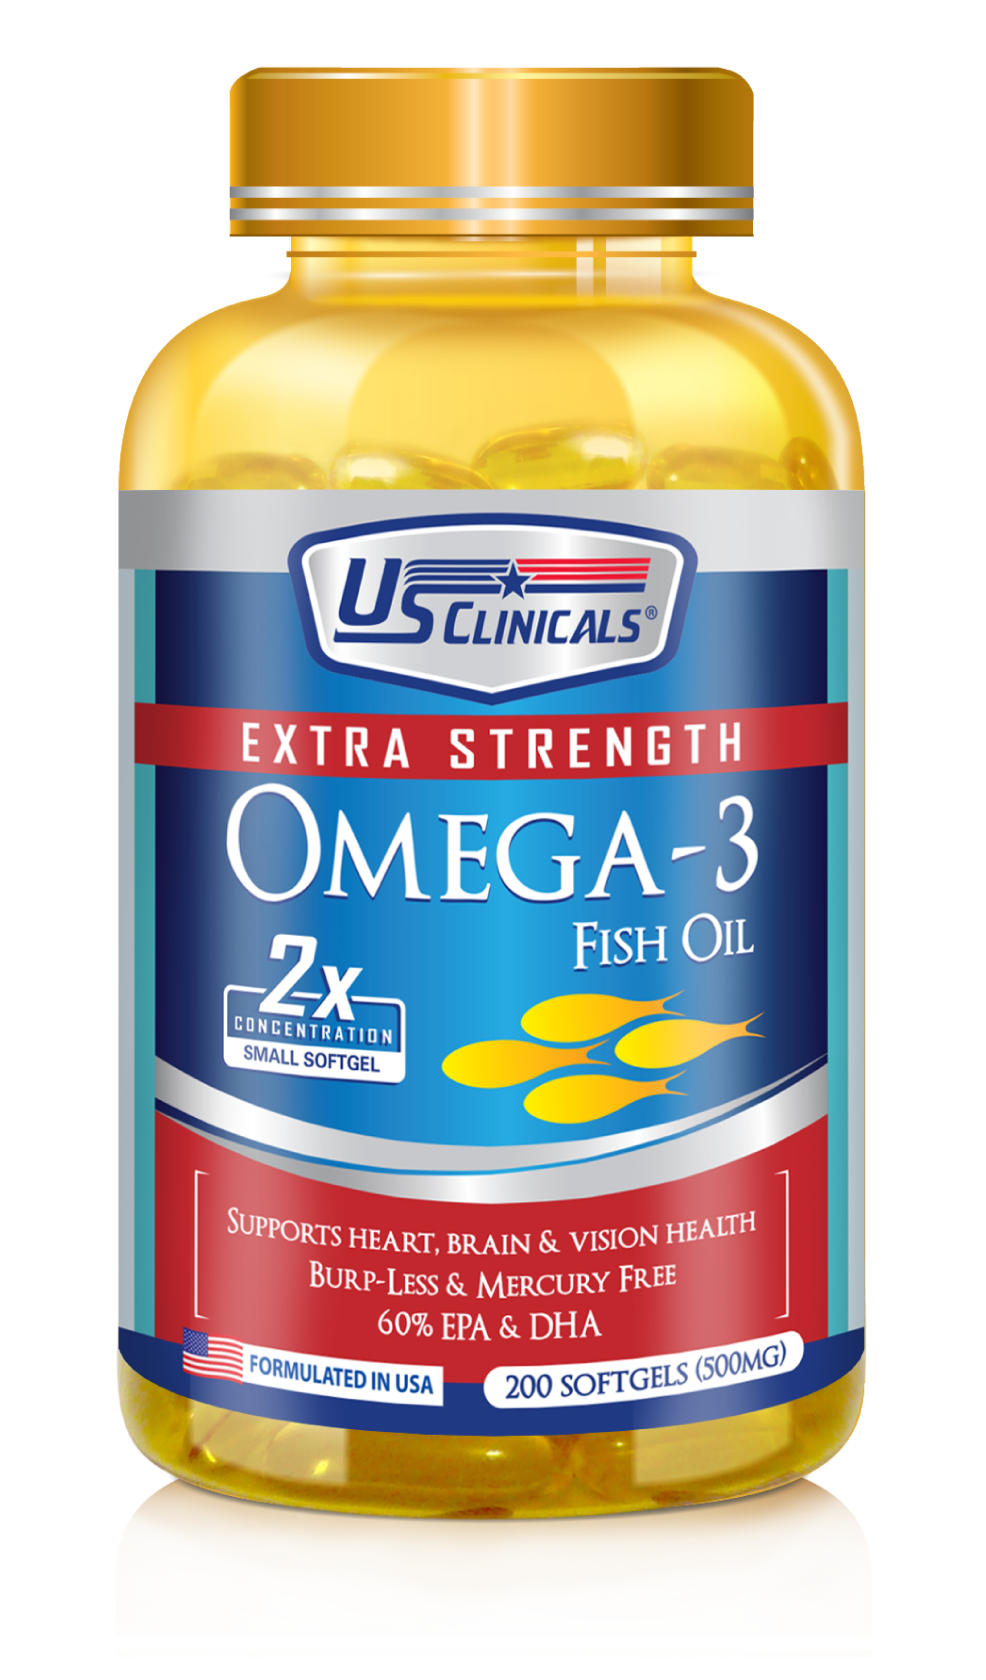 Extra Strength Omega-3 Fish Oil Bottle-02.png__PID:f2bdfea0-3cf5-482a-afb2-df4a897020da